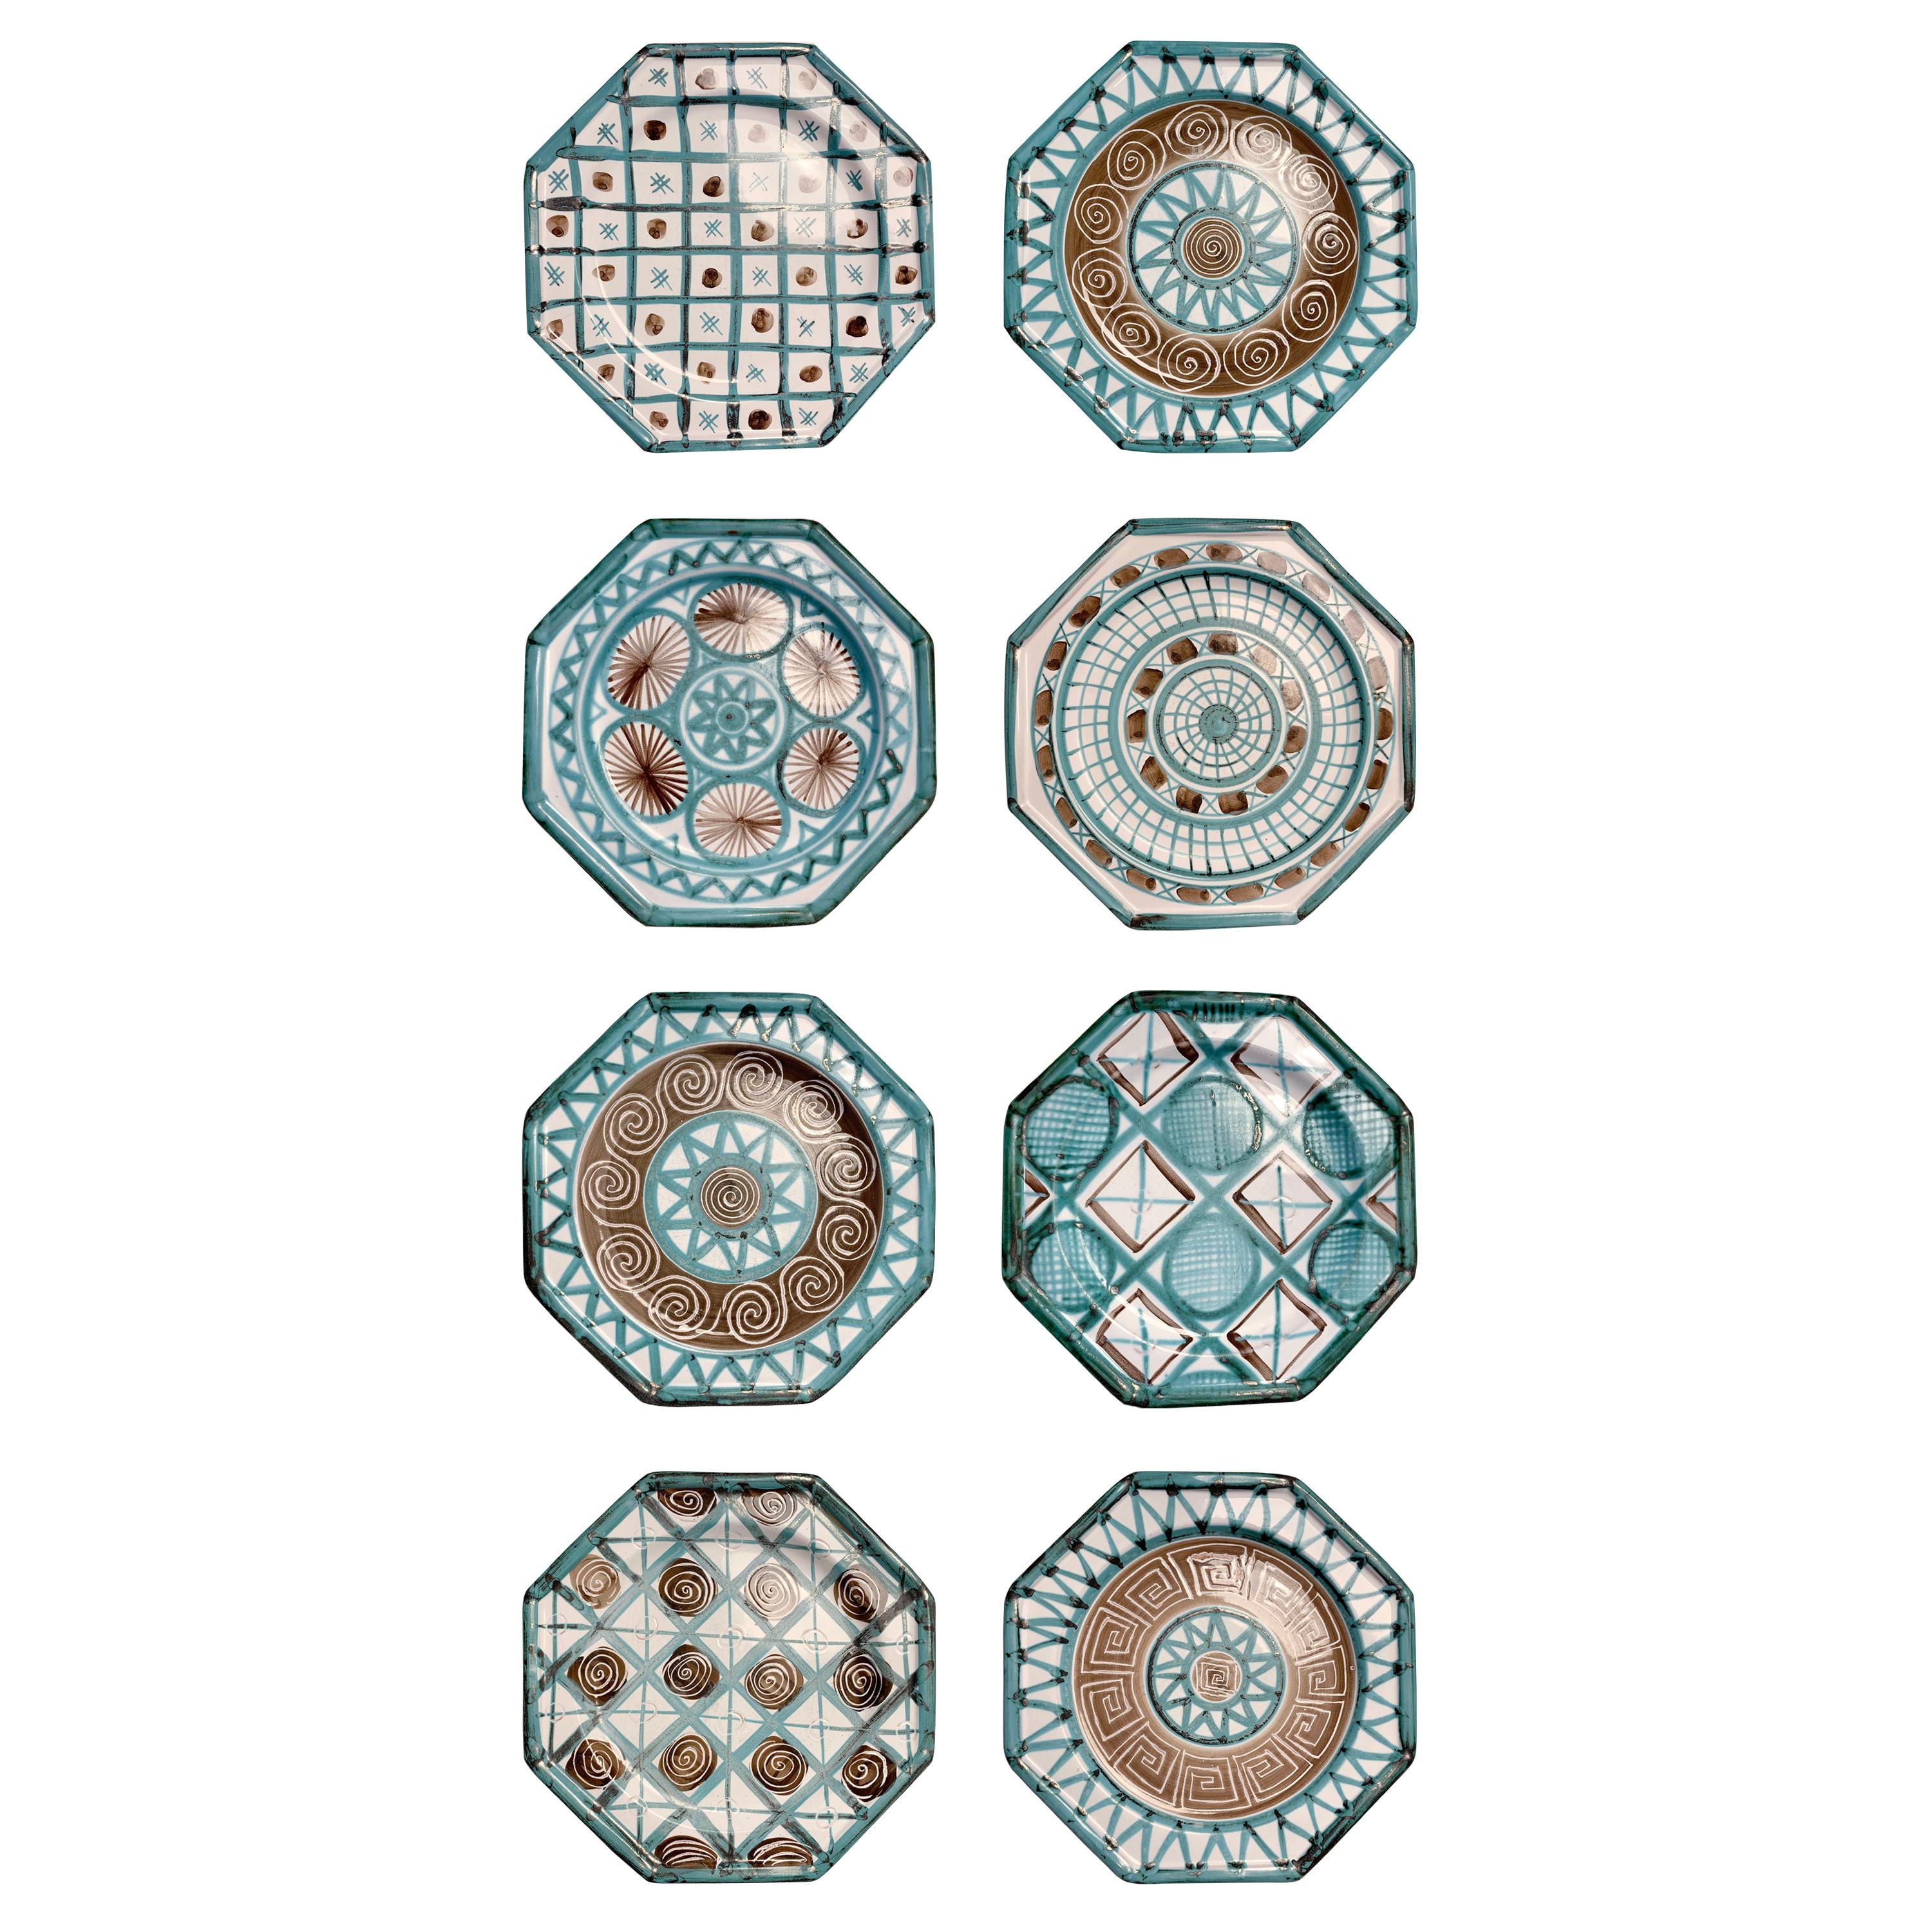 Robert Picault Octagon Plates